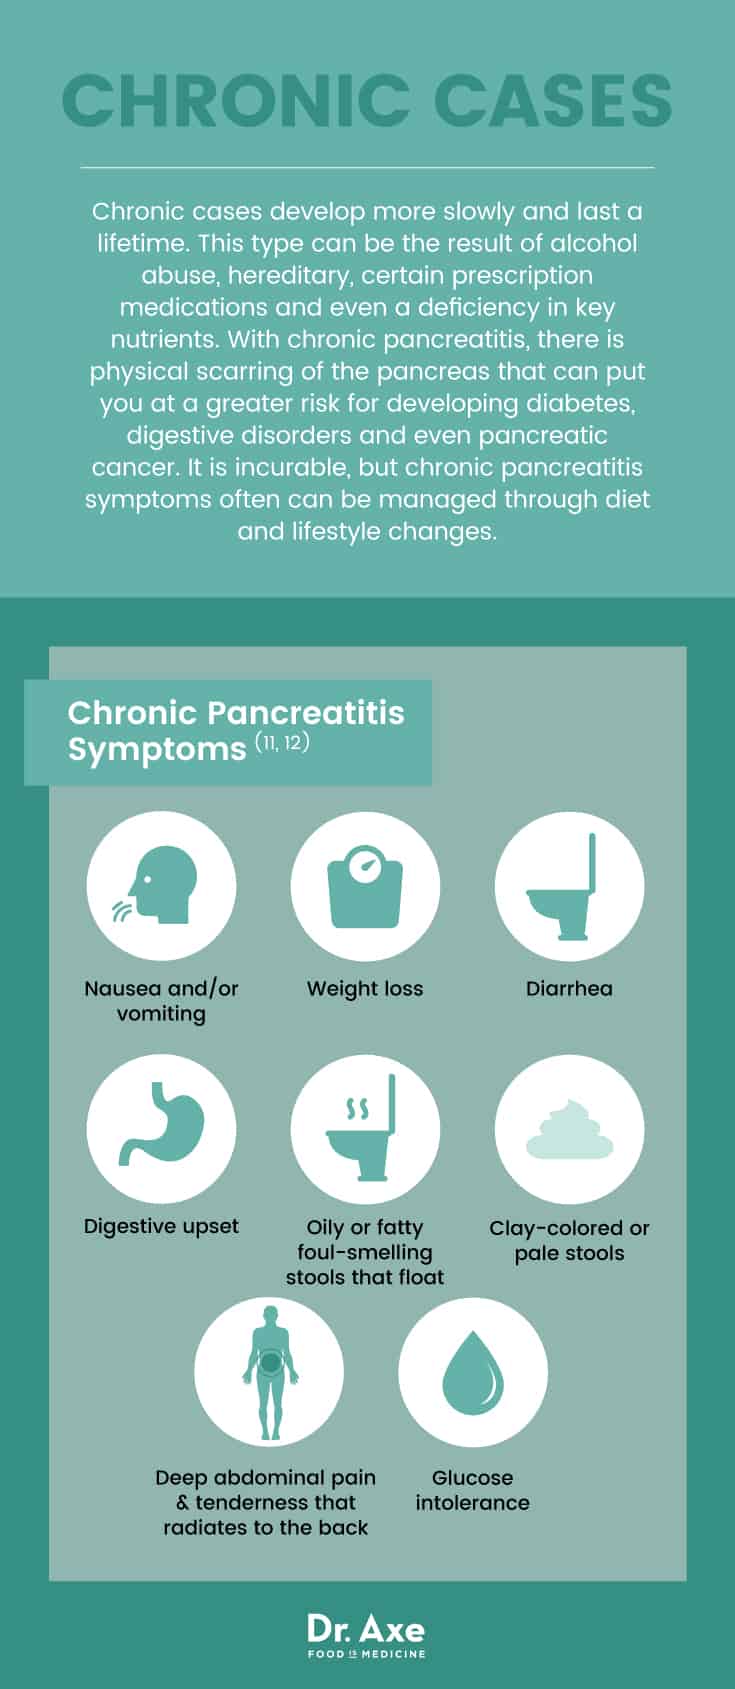 Chronic pancreatitis symptoms - Dr. Axe